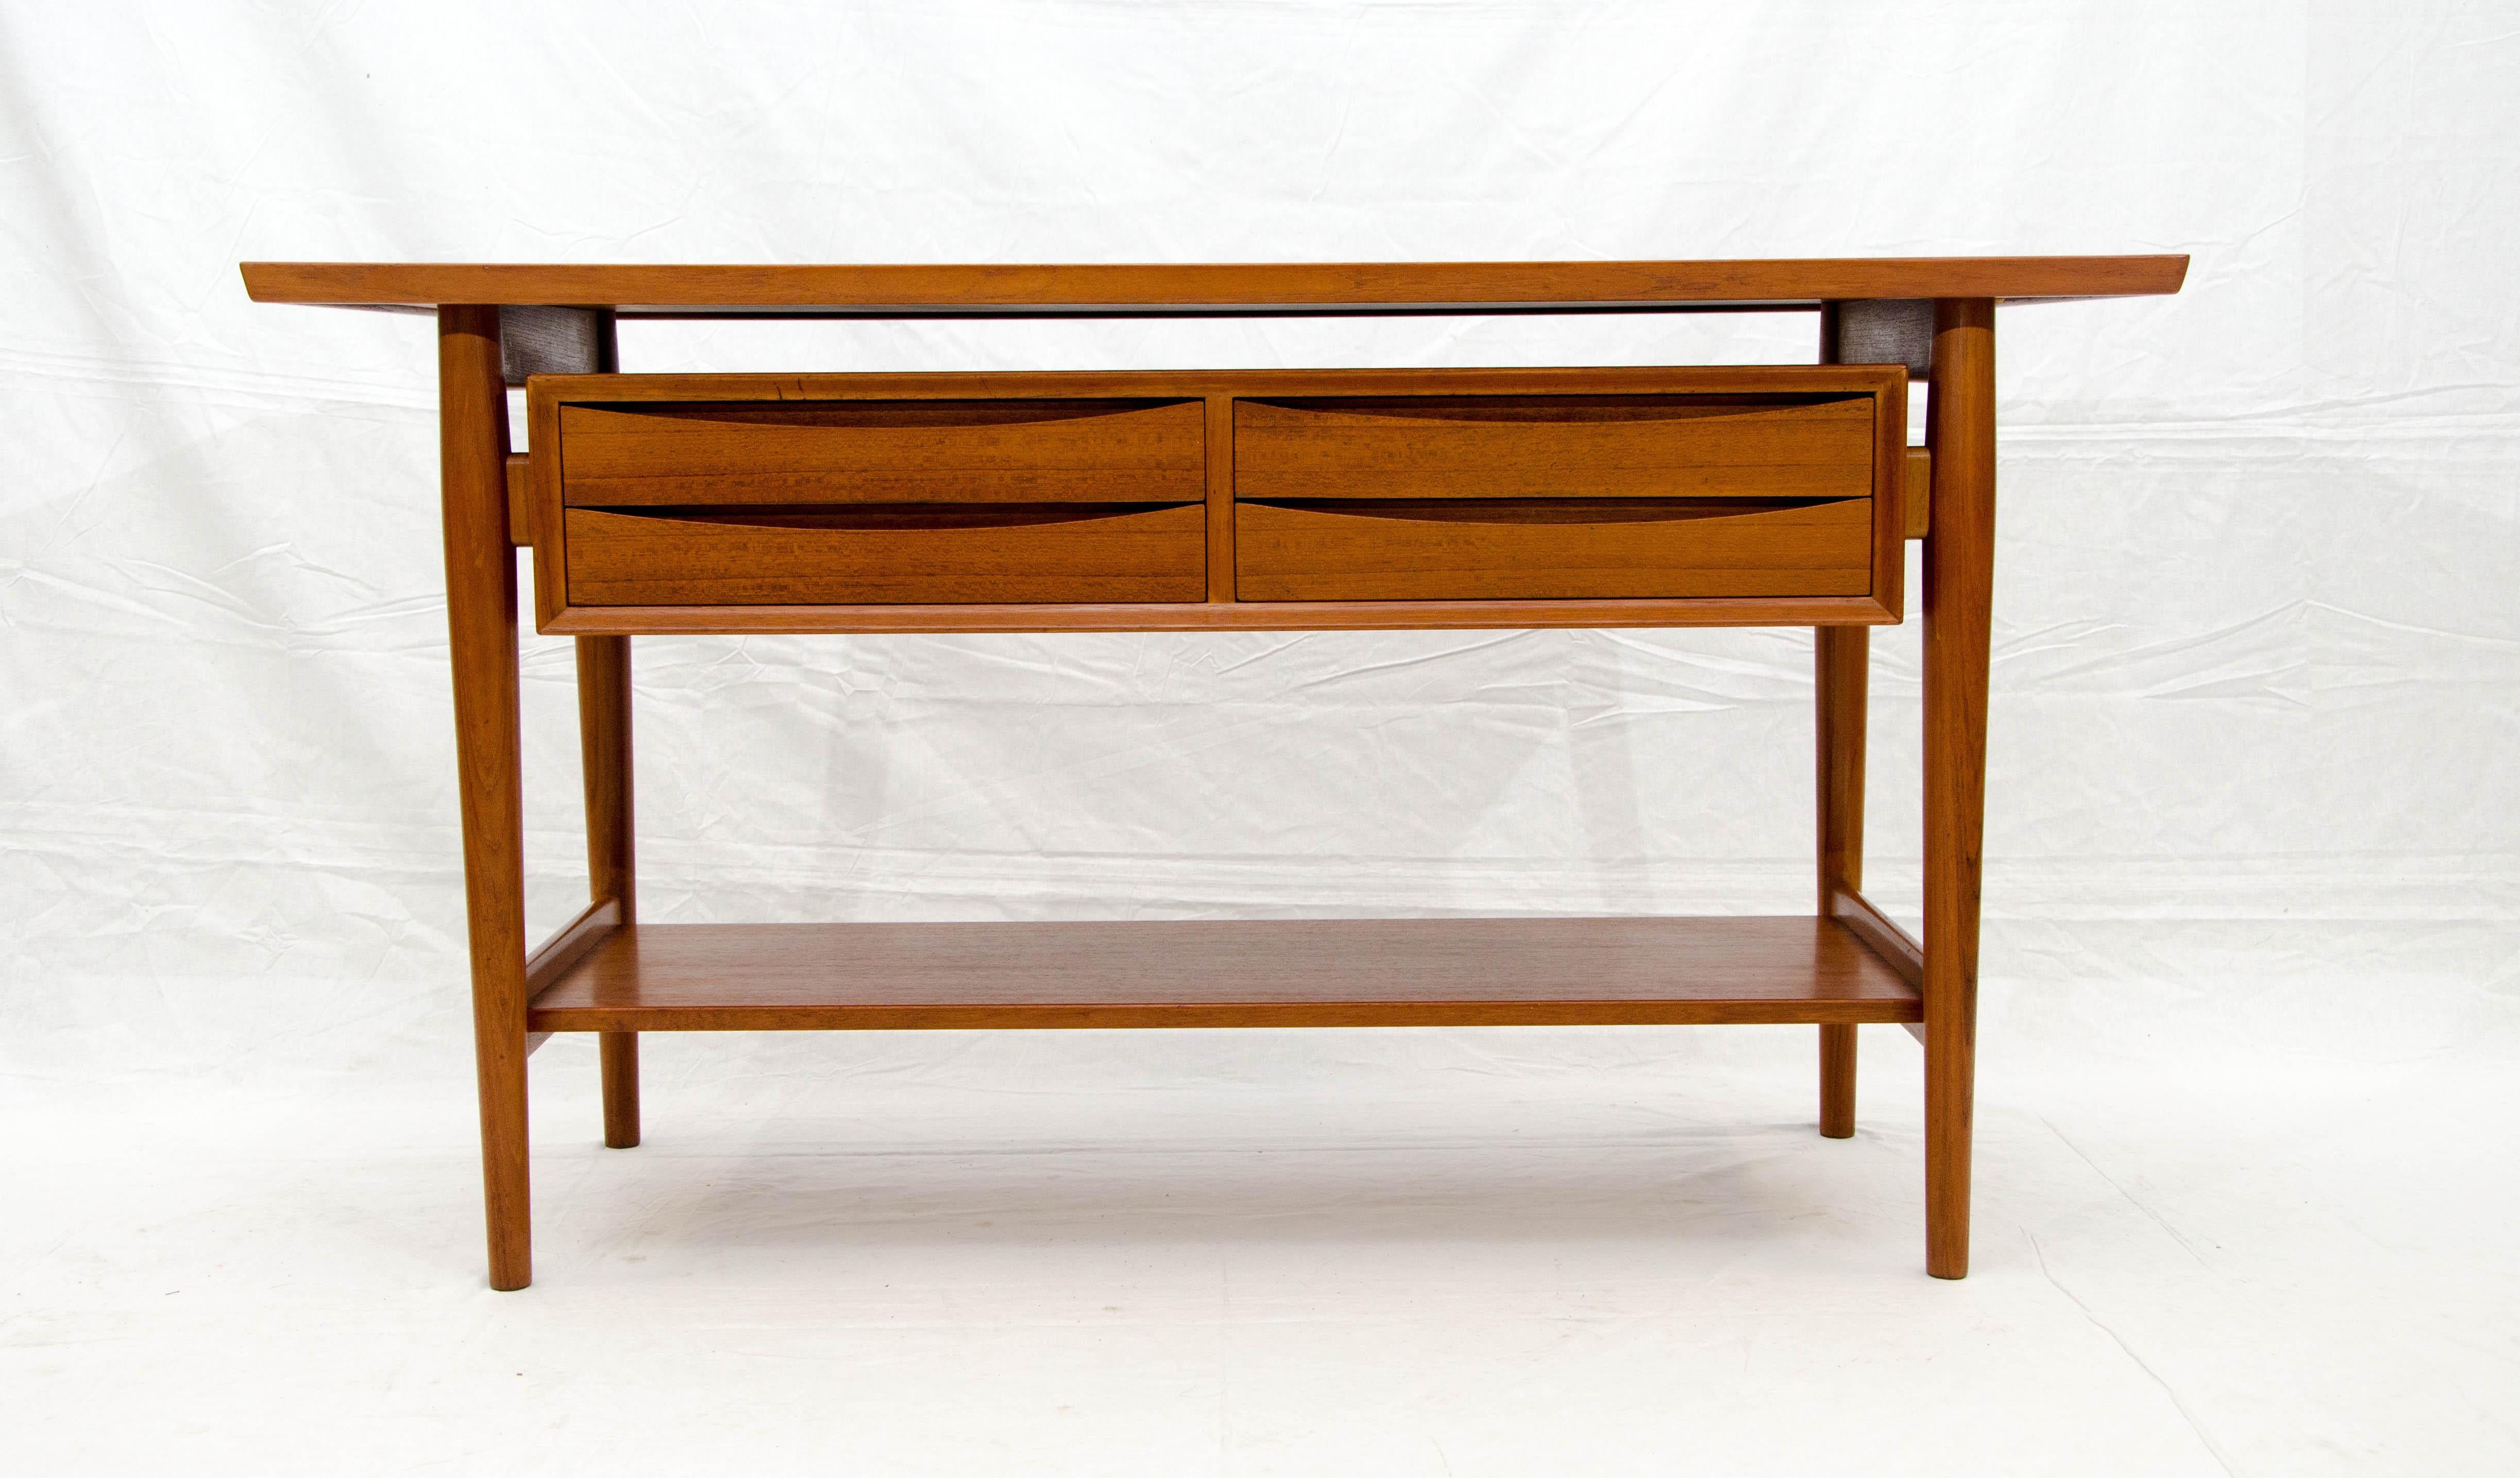 Scandinavian Modern Unusual Danish Teak Buffet or Console Table by Arne Vodder for Sibast Furniture